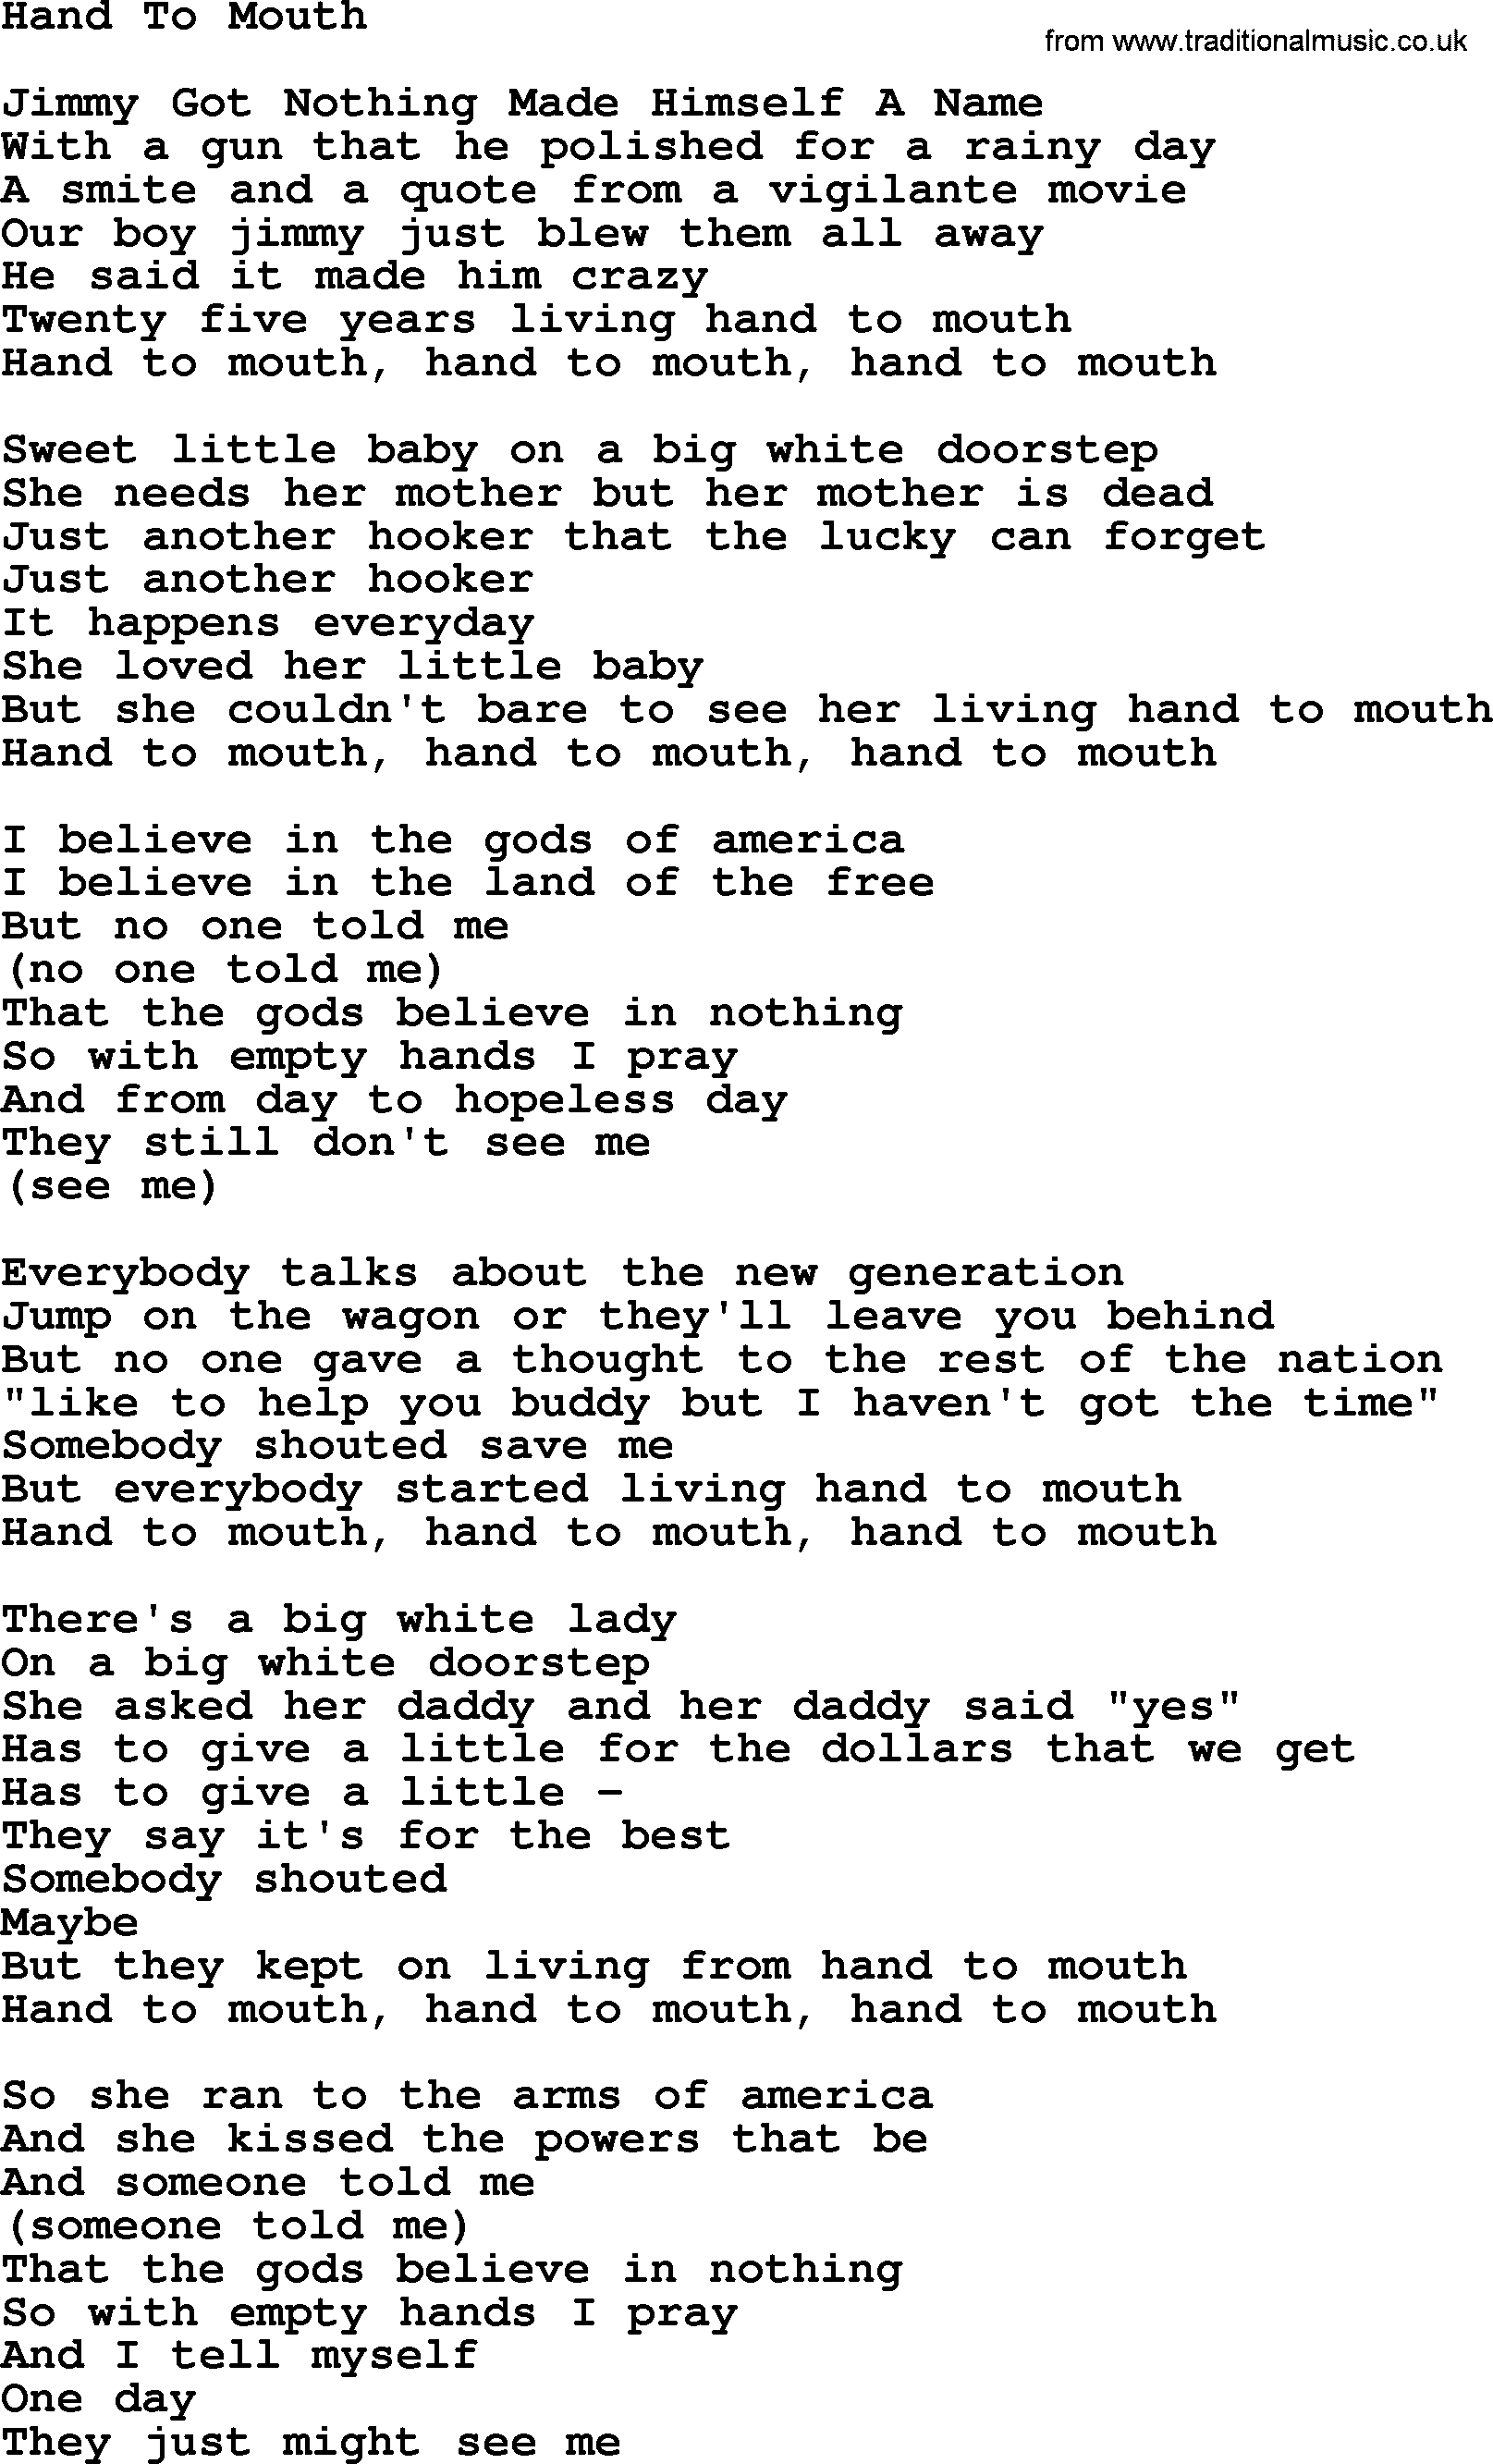 Joan Baez song Hand To Mouth, lyrics